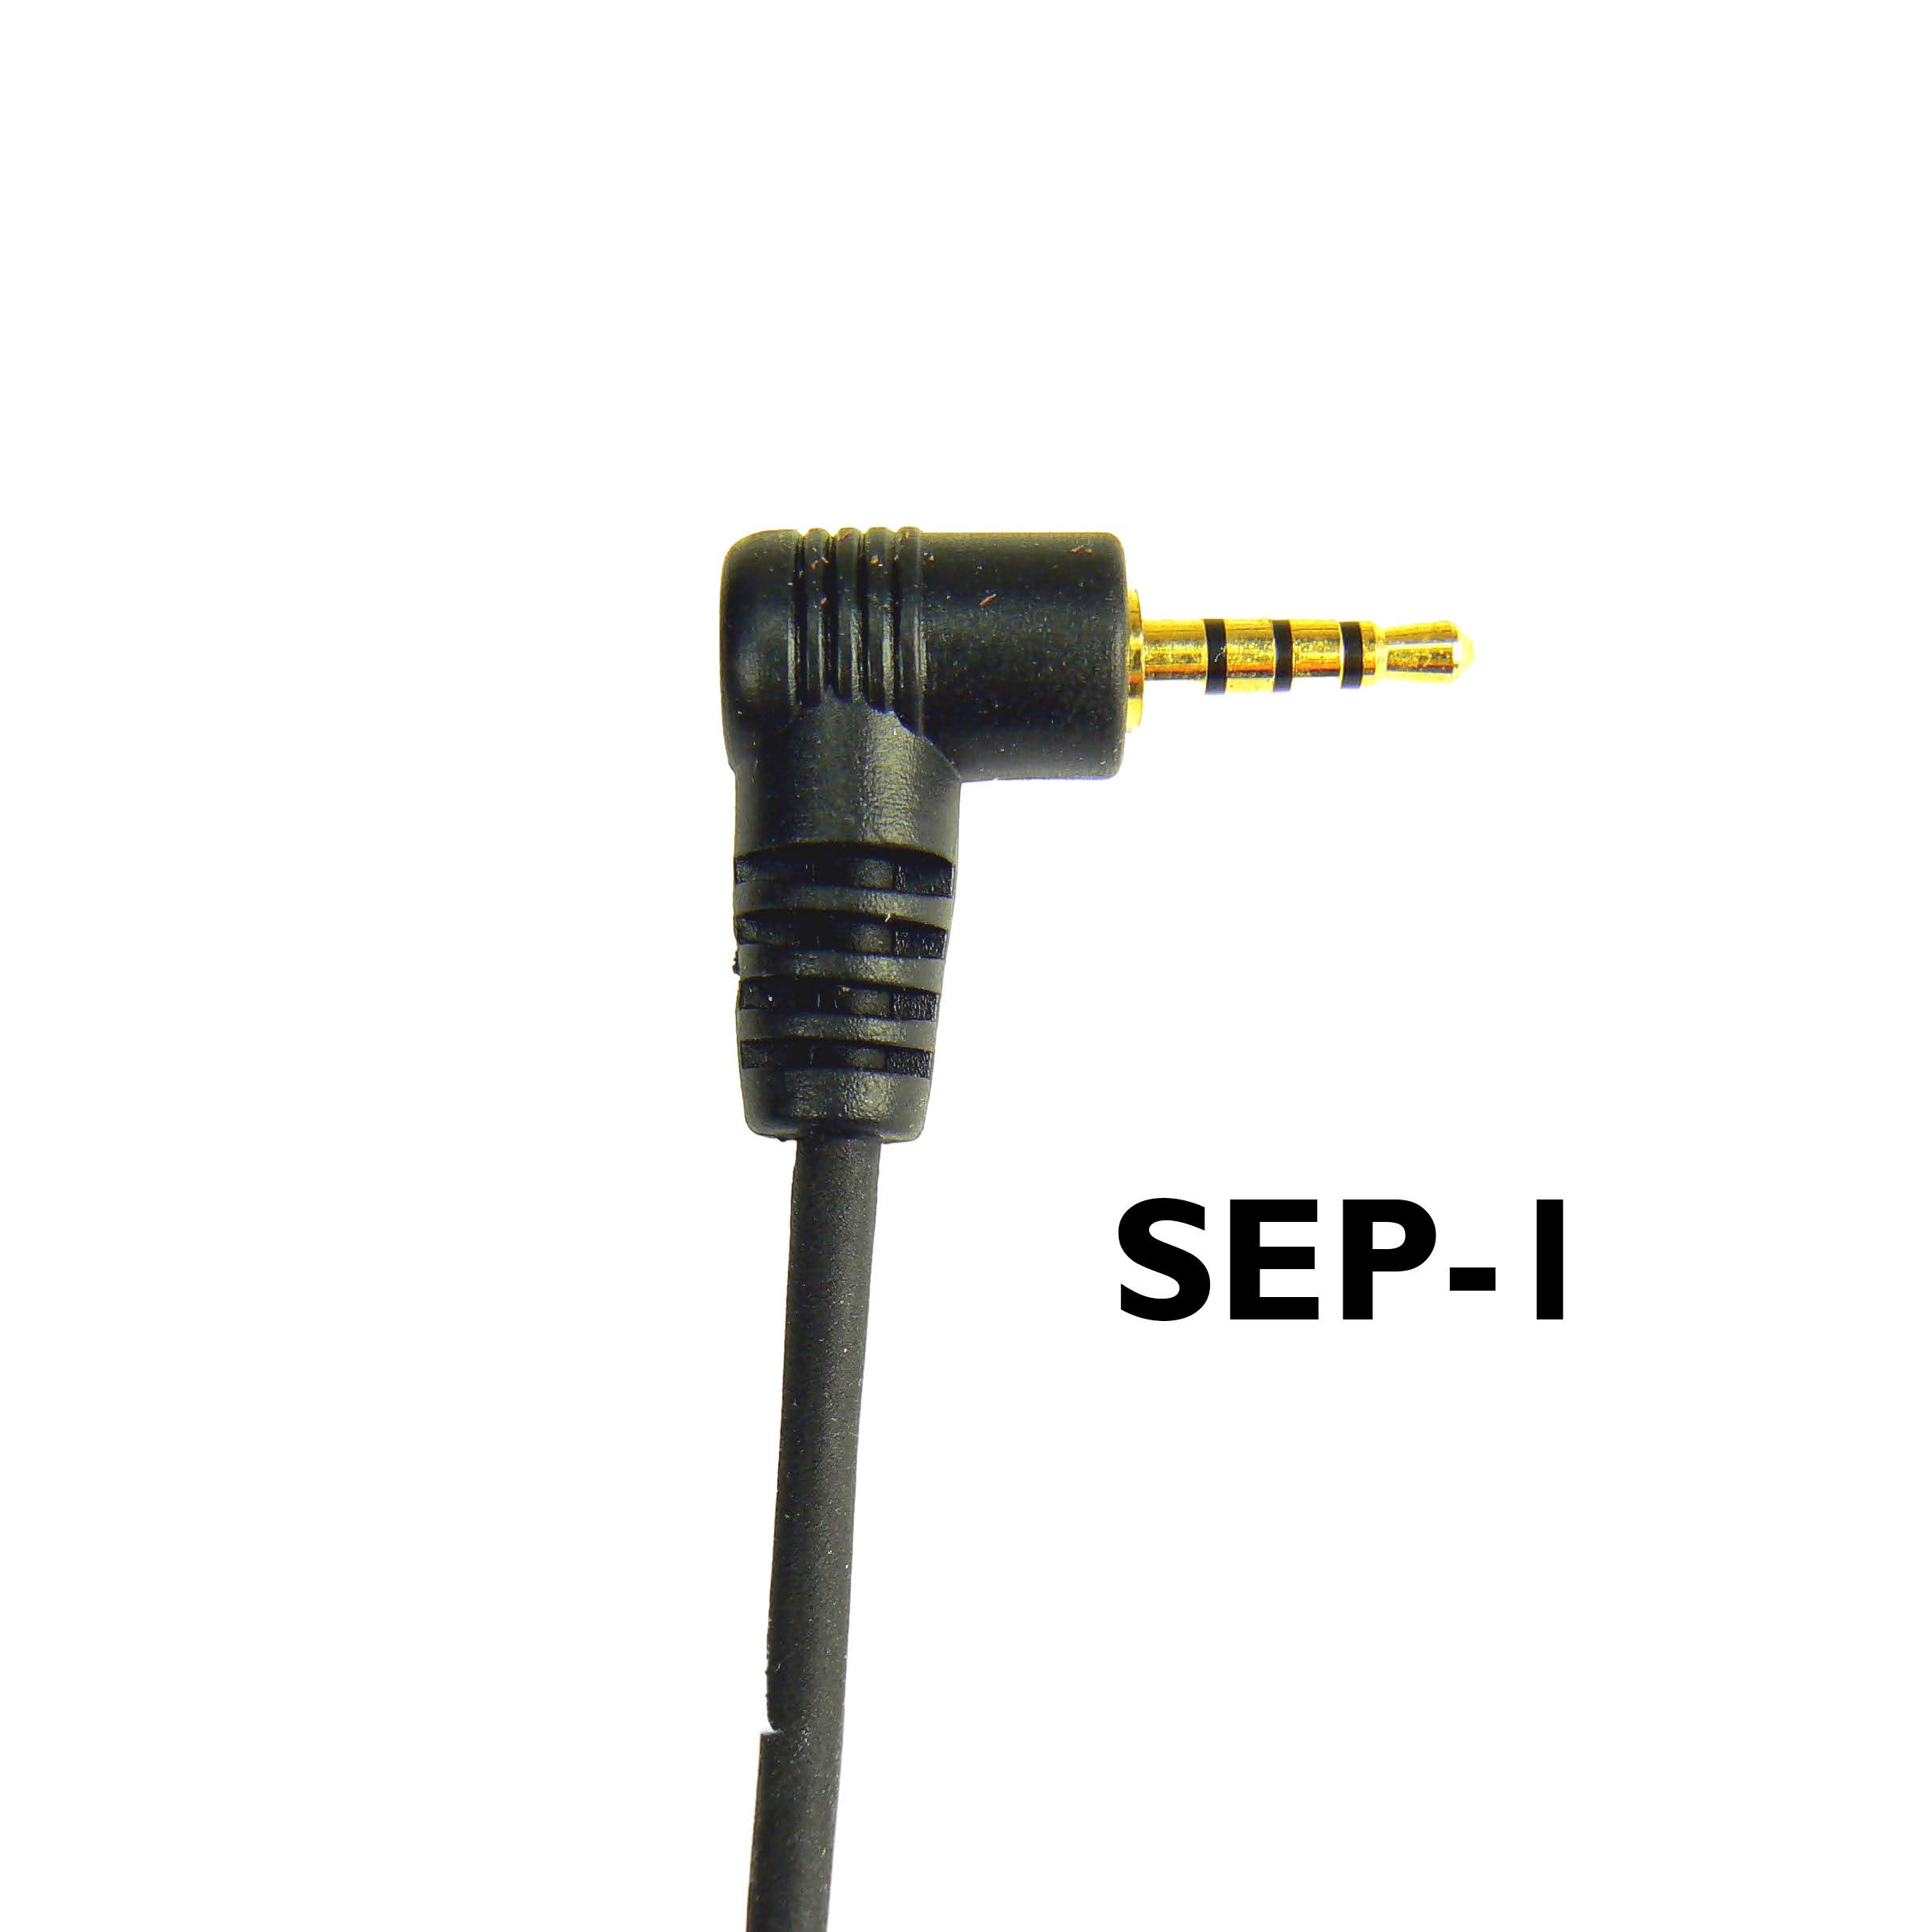 Sepura Tetra single pin plug ending SEP1